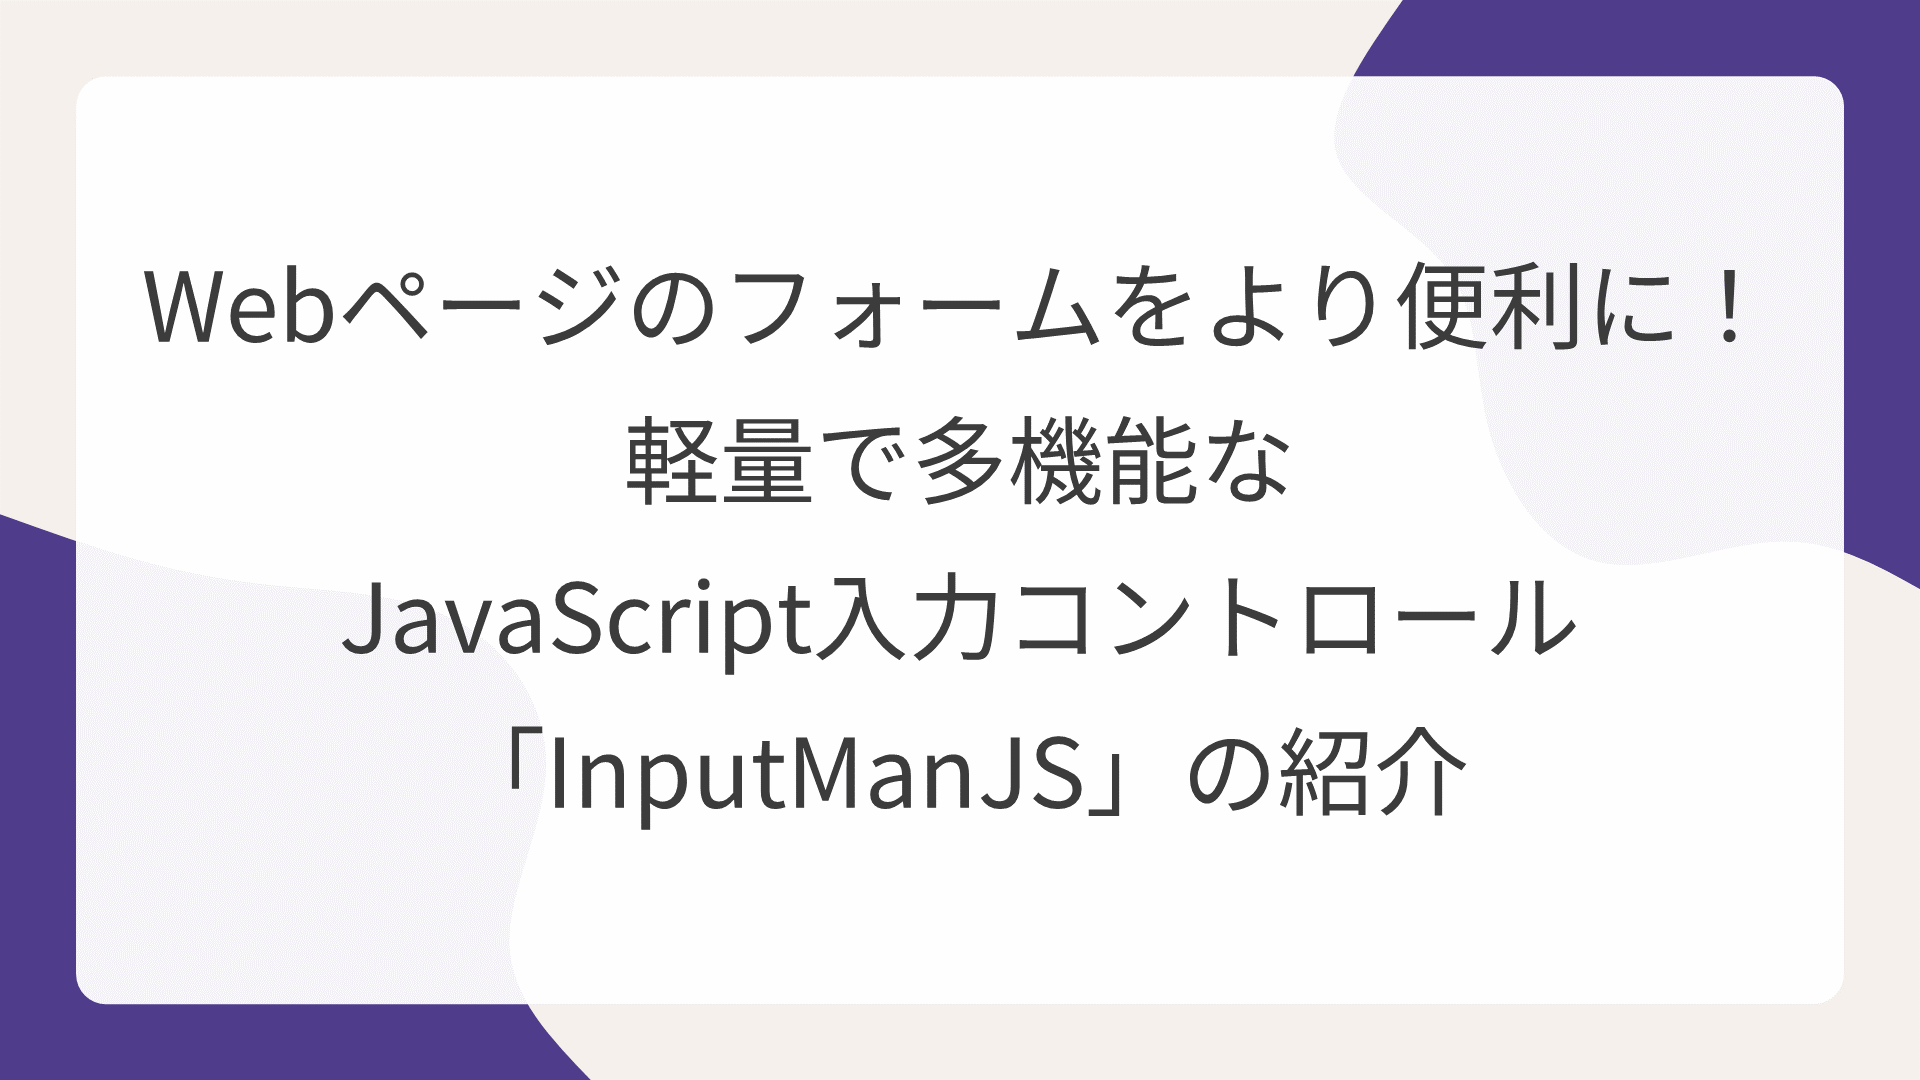 Webページのフォームをより便利に！ 軽量で多機能なJavaScript入力コントロール「InputManJS」の紹介